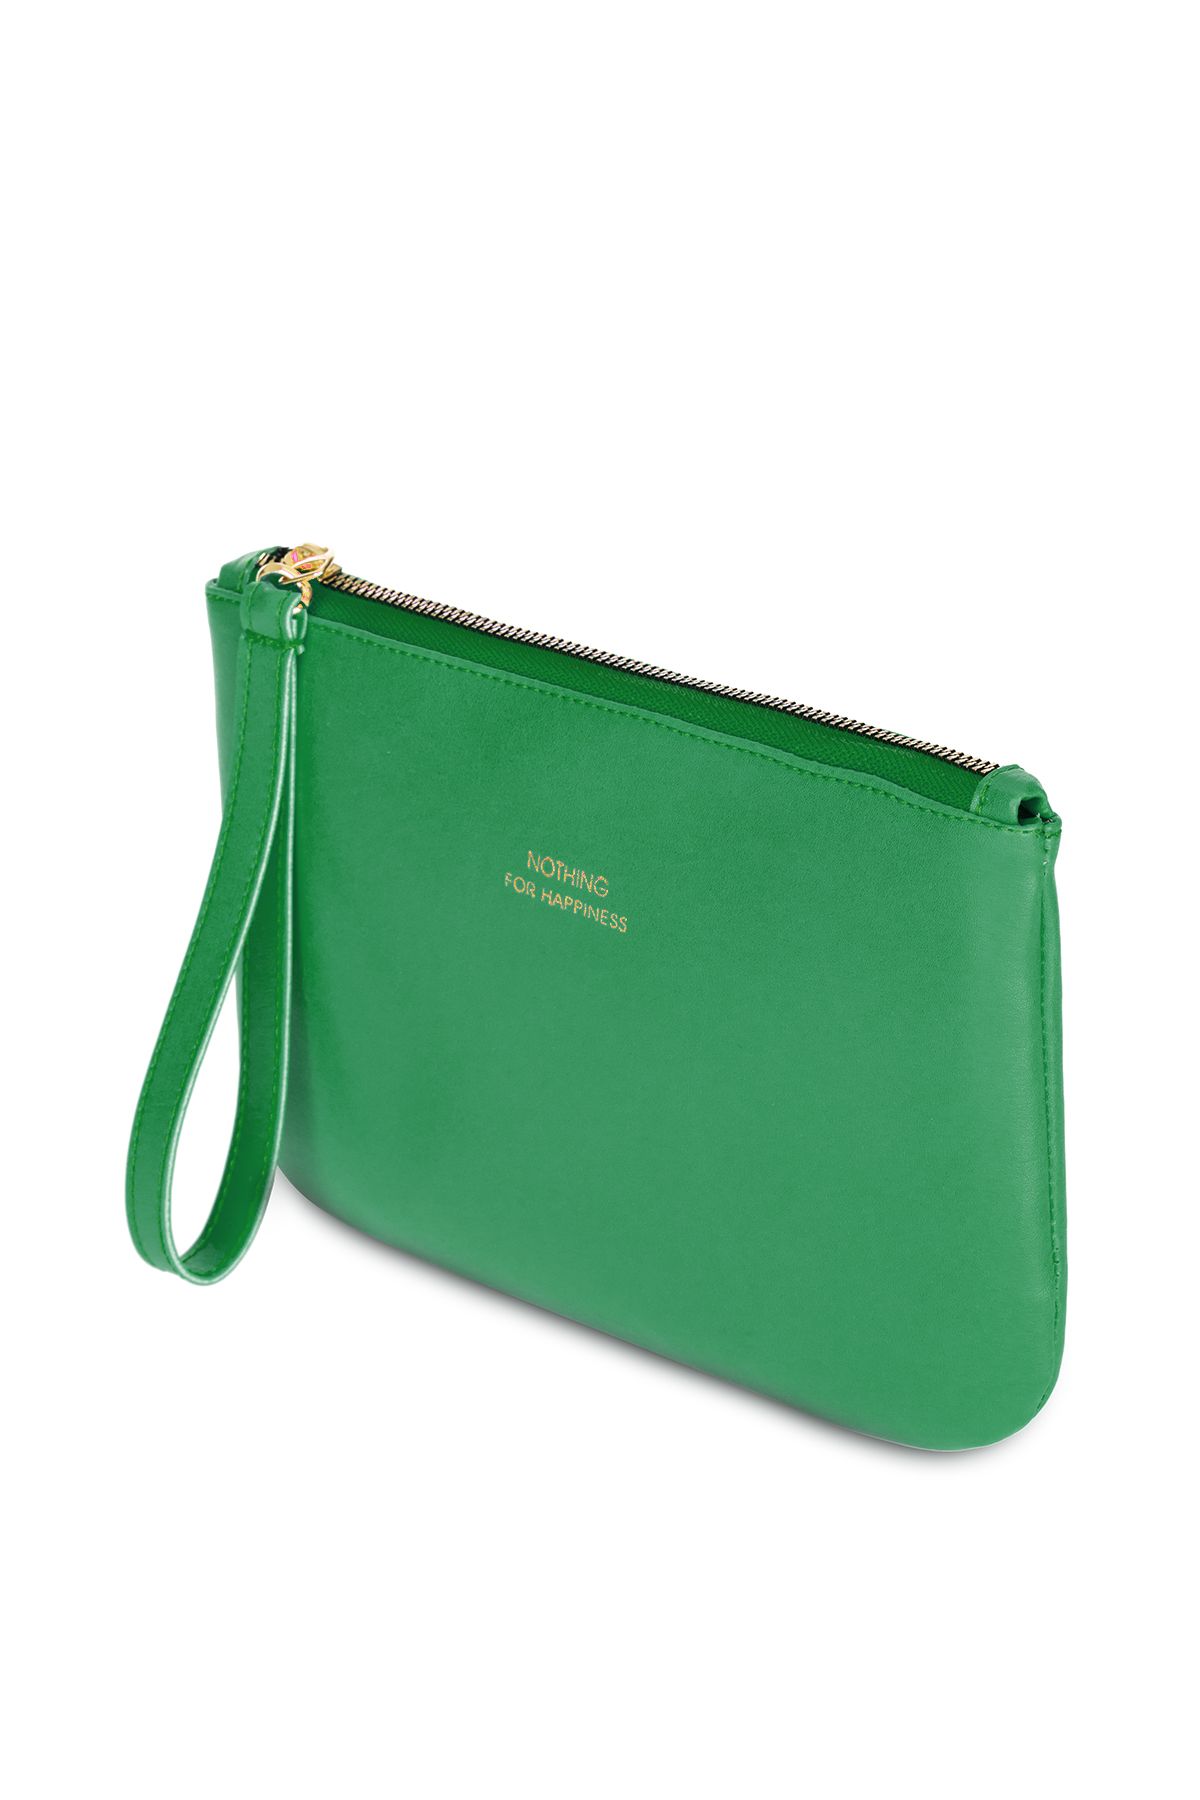 GIANNI BINI Dark Green Jenny FoldOver Purse Handbag Clutch New | Purses and  handbags, Foldover purse, Clutch handbag